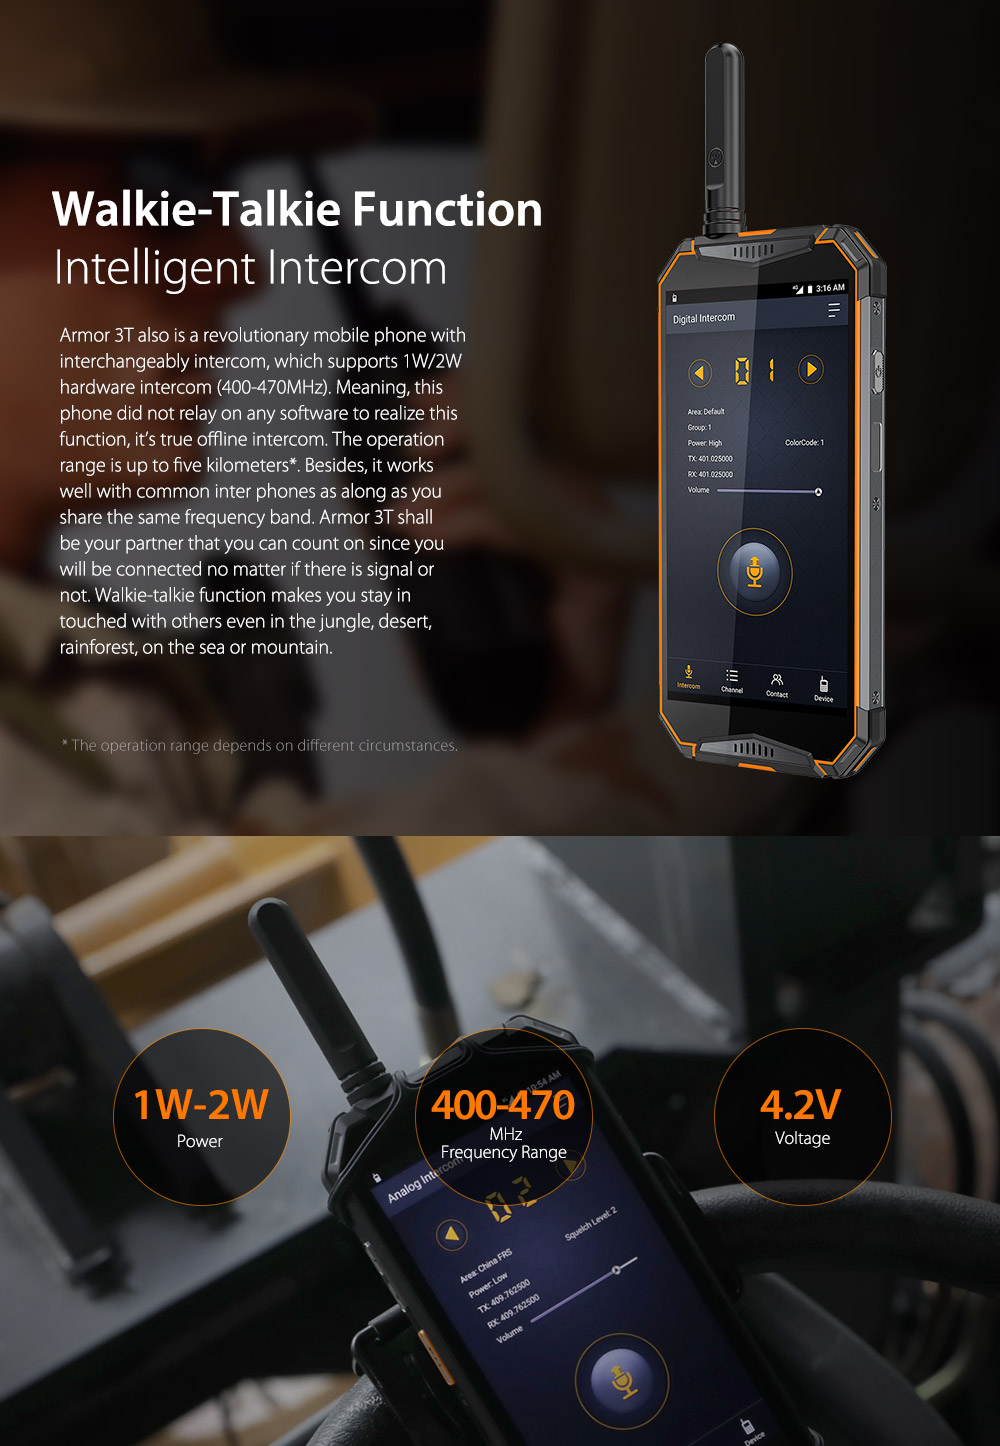 Ulefone-Armor-3T-57-Inch-Walkie-Talkie-NFC-IP68-IP69K-4GB-64GB-Helio-P23-Octa-core-4G-Smartphone-1379554